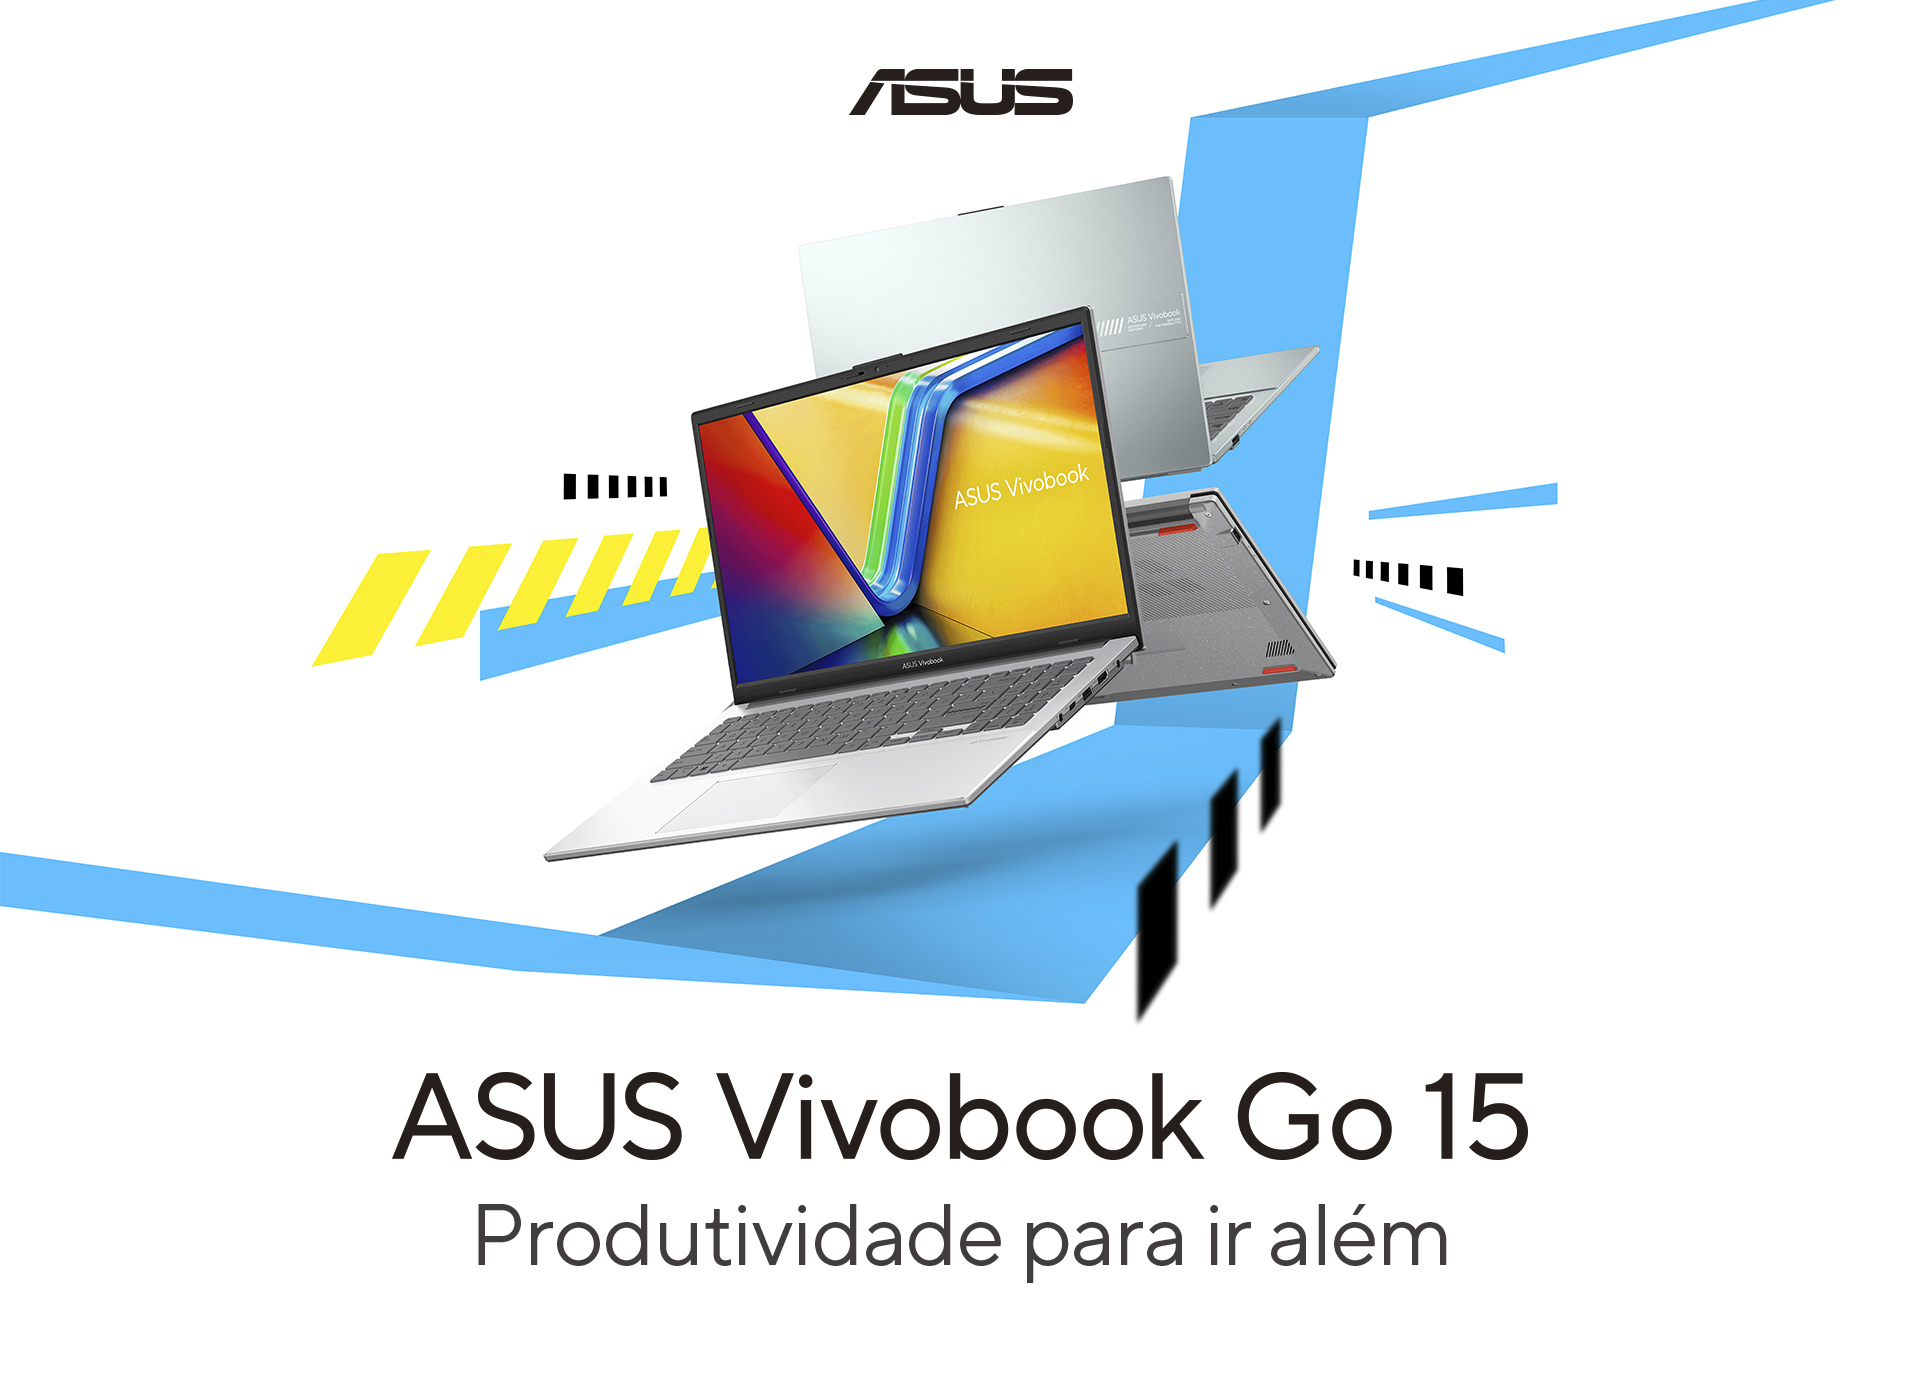 Vivobook Go 15